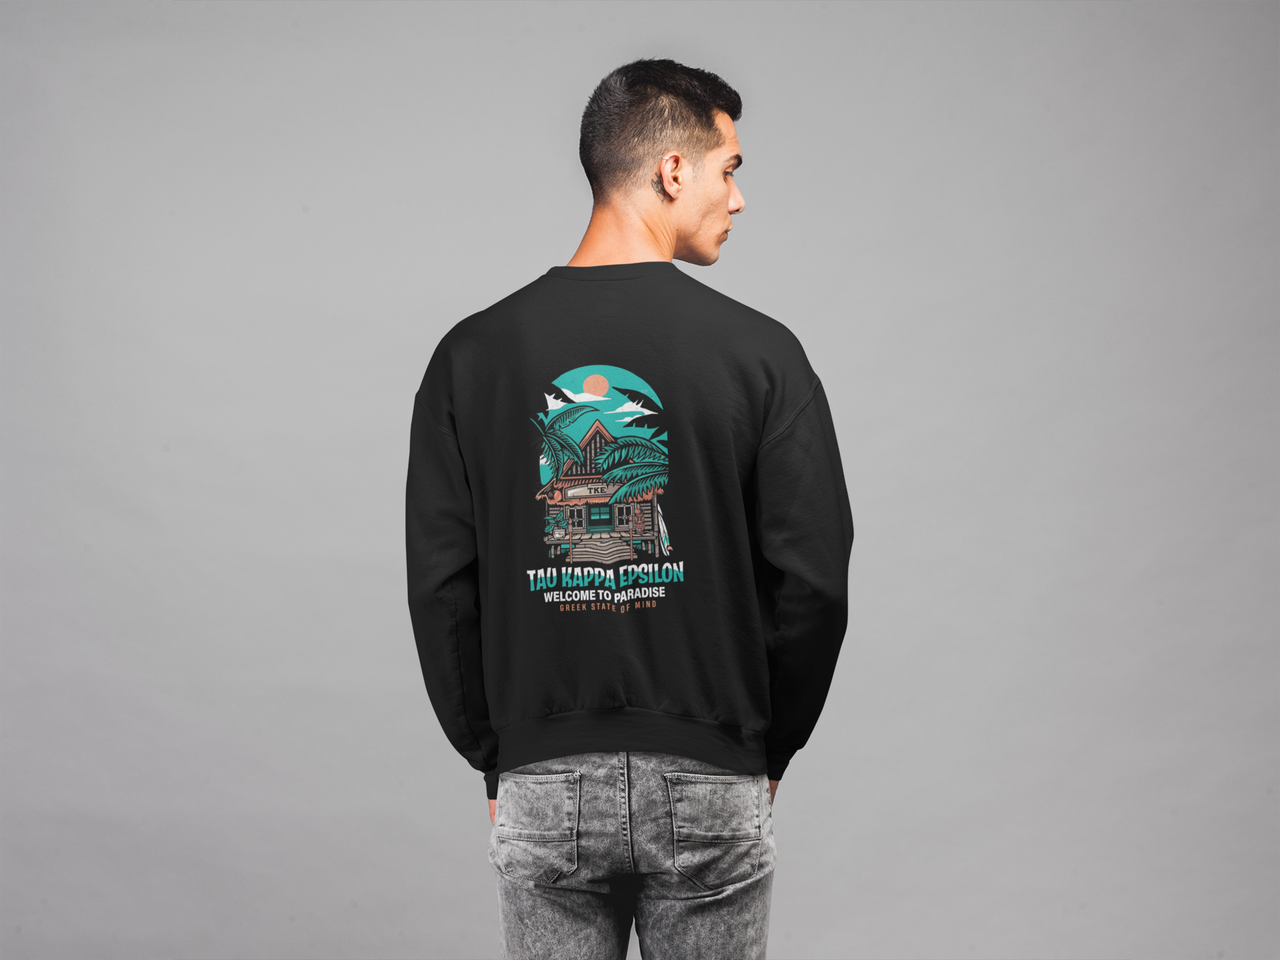 Tau Kappa Epsilon Graphic Crewneck Sweatshirt | Welcome to Paradise | Tau Kappa Epsilon Fraternity design